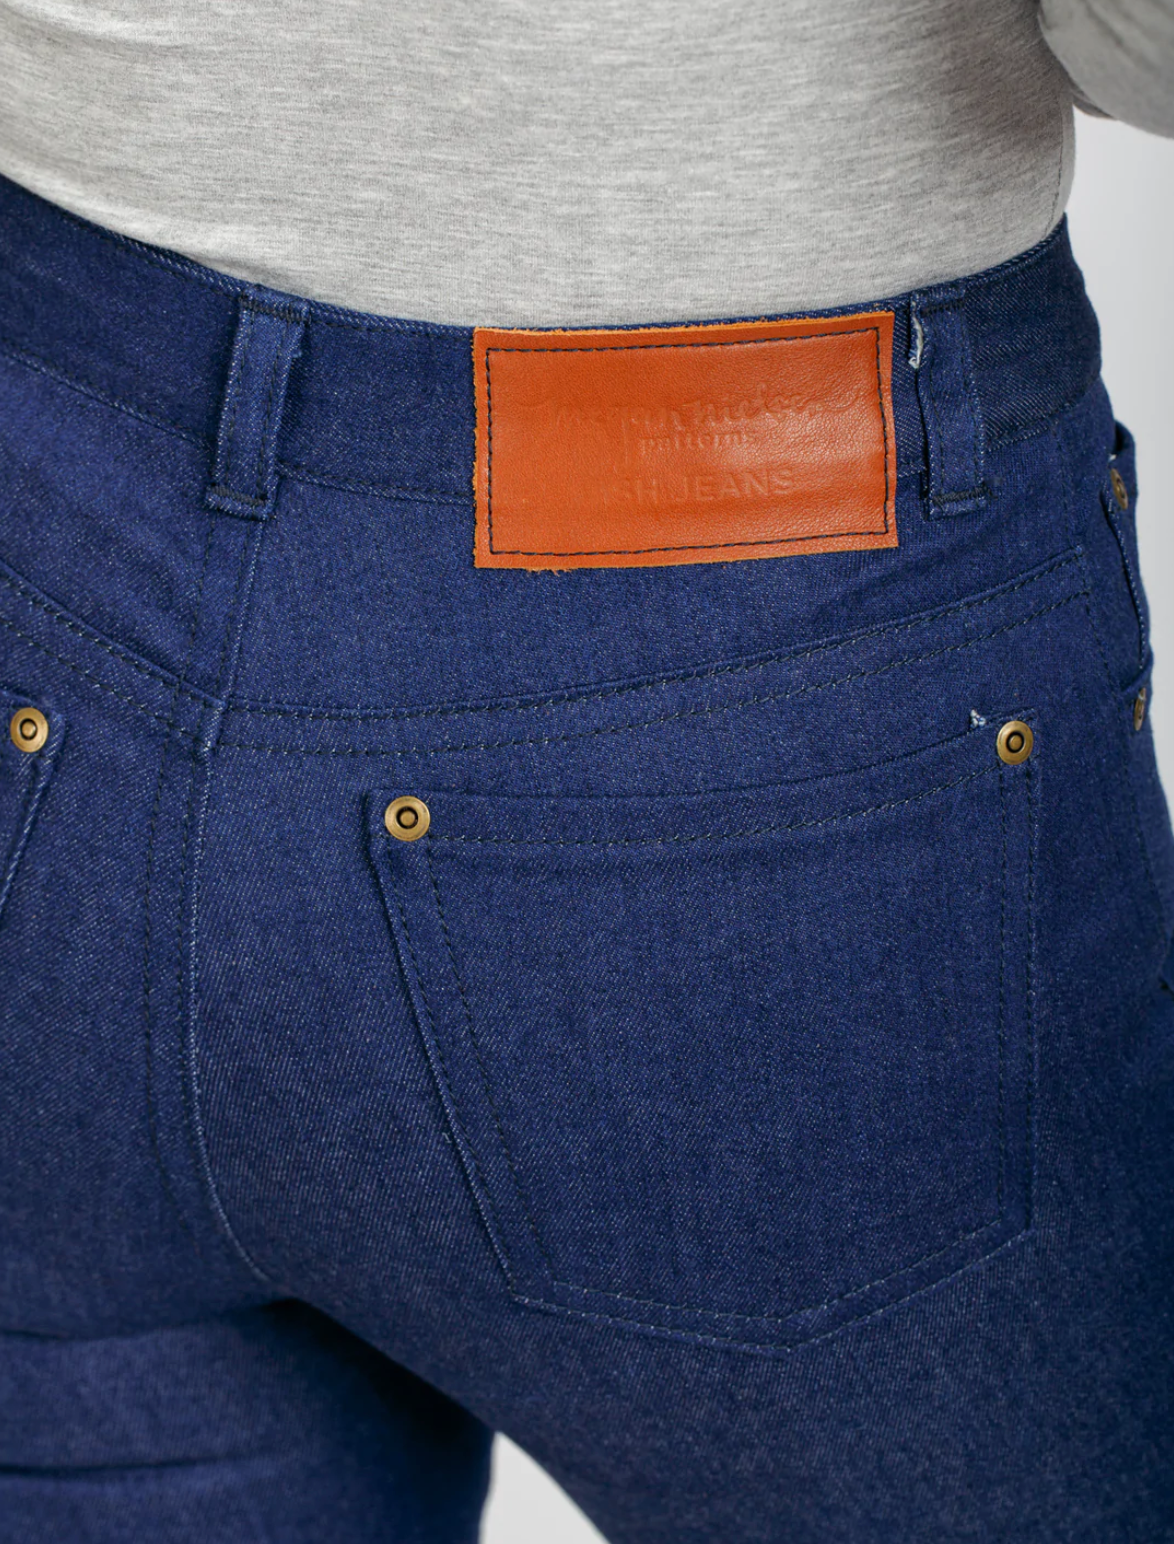 Ash 4 in 1 jeans - Paper pattern - MEGAN NIELSEN